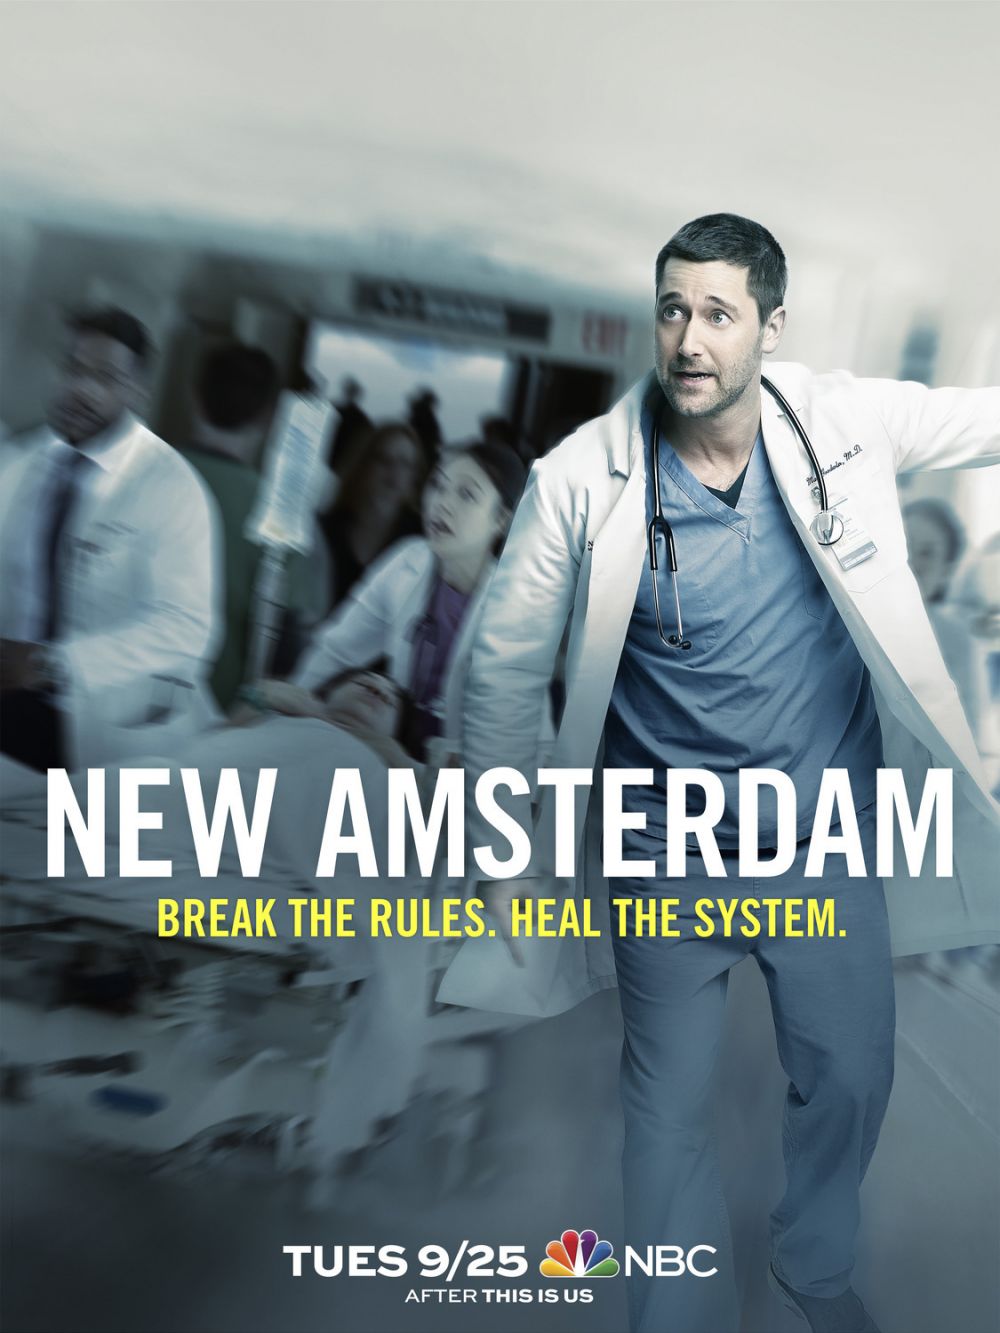 11 Film serial Netflix terbaik dunia kedokteran, ungkap rahasia medis